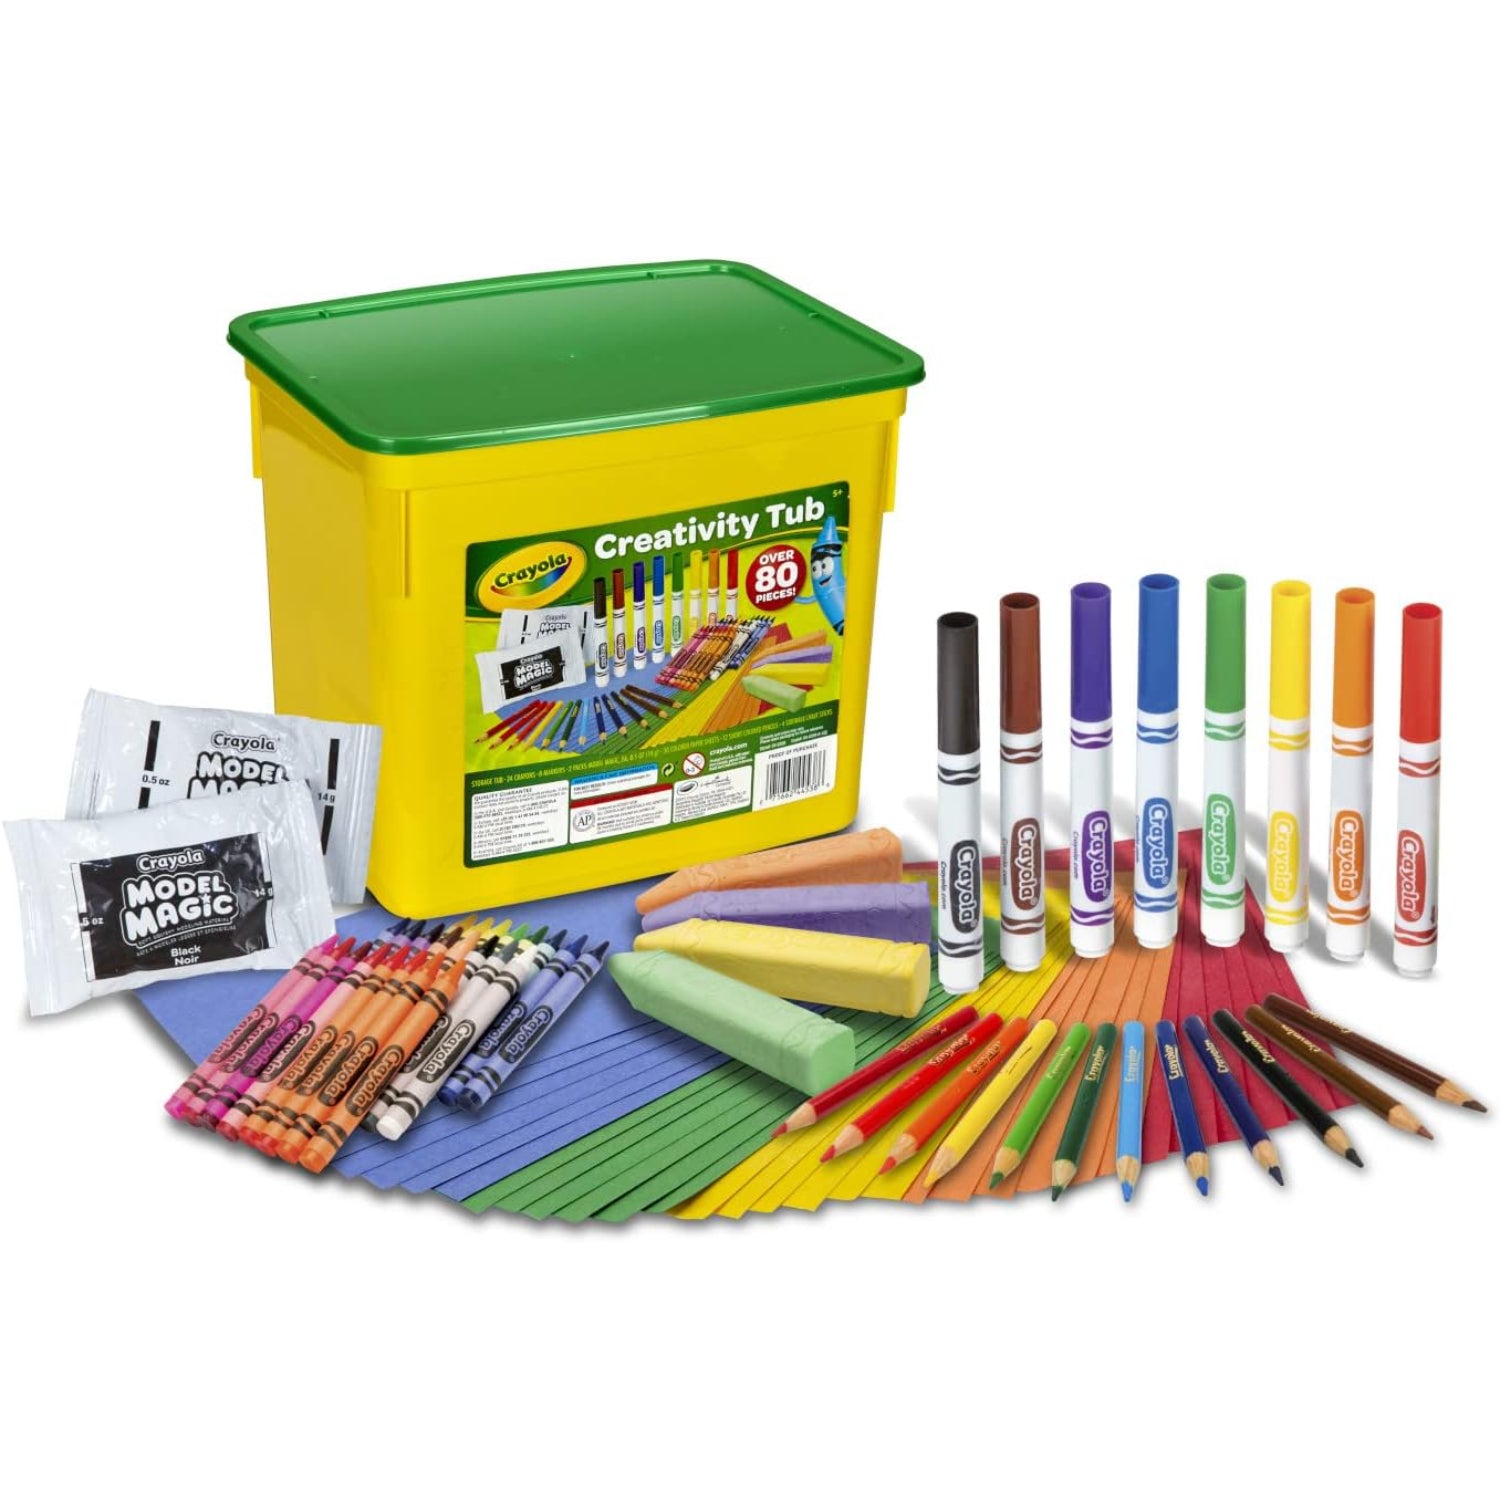 Crayola Watercolor Colored Pencils (24ct), Watercolor Paint Alternative,  Watercolor Pencil Set for Kids, Craft Supplies, 3+